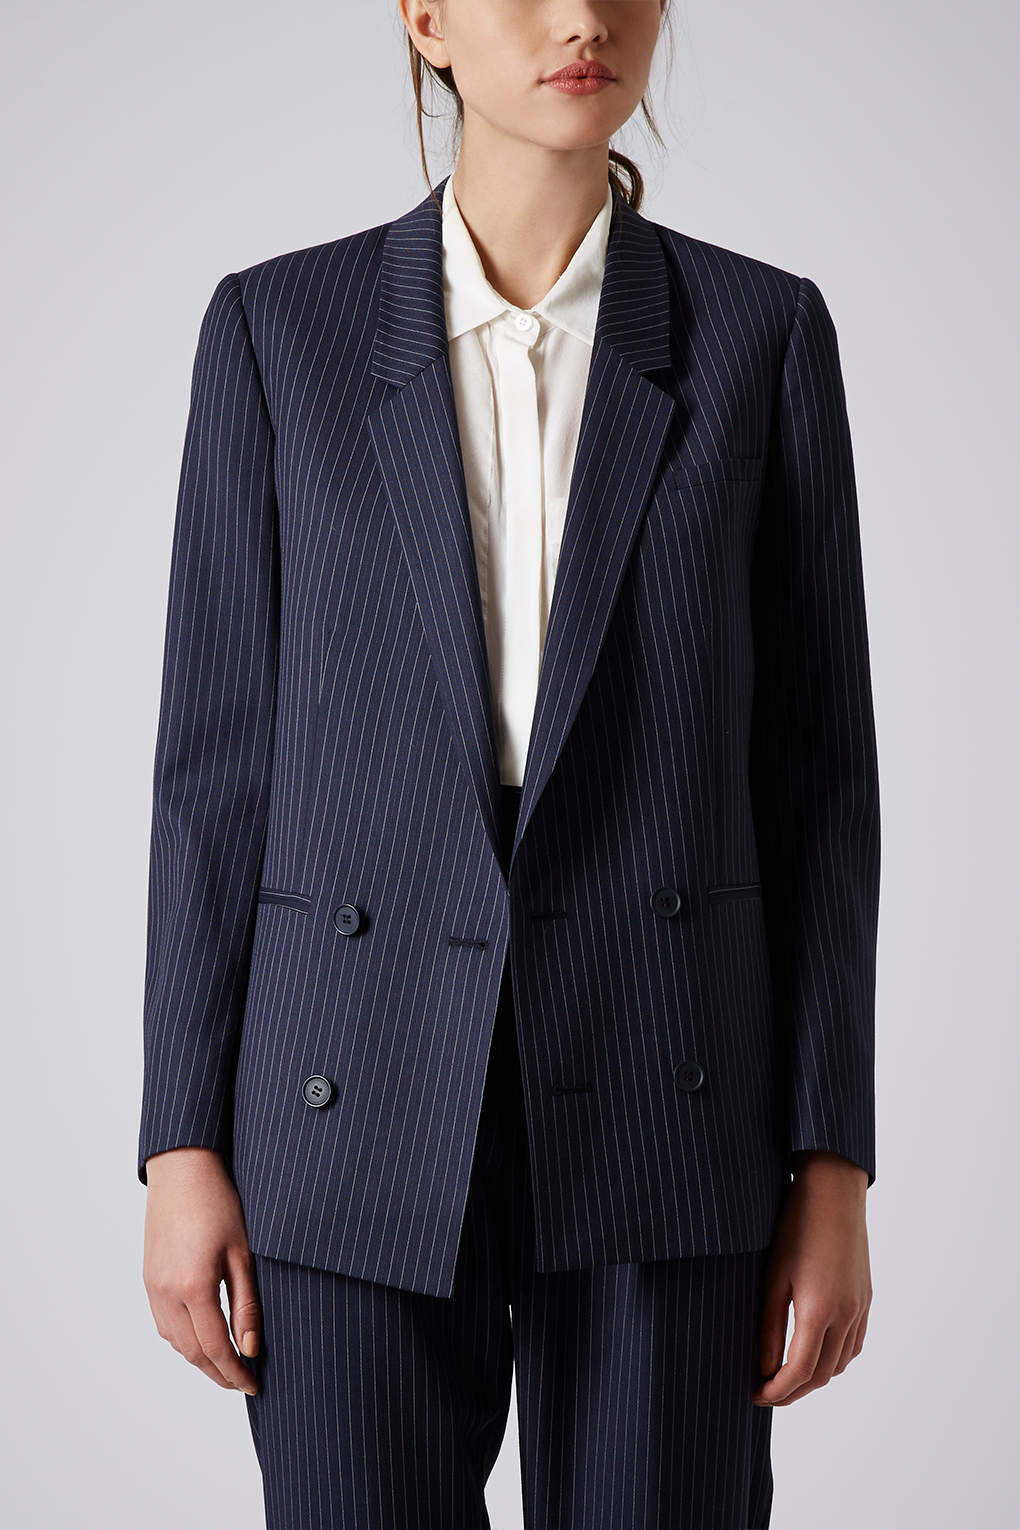 Lyst - Topshop Modern Tailoring Pinstripe Suit Blazer in Blue